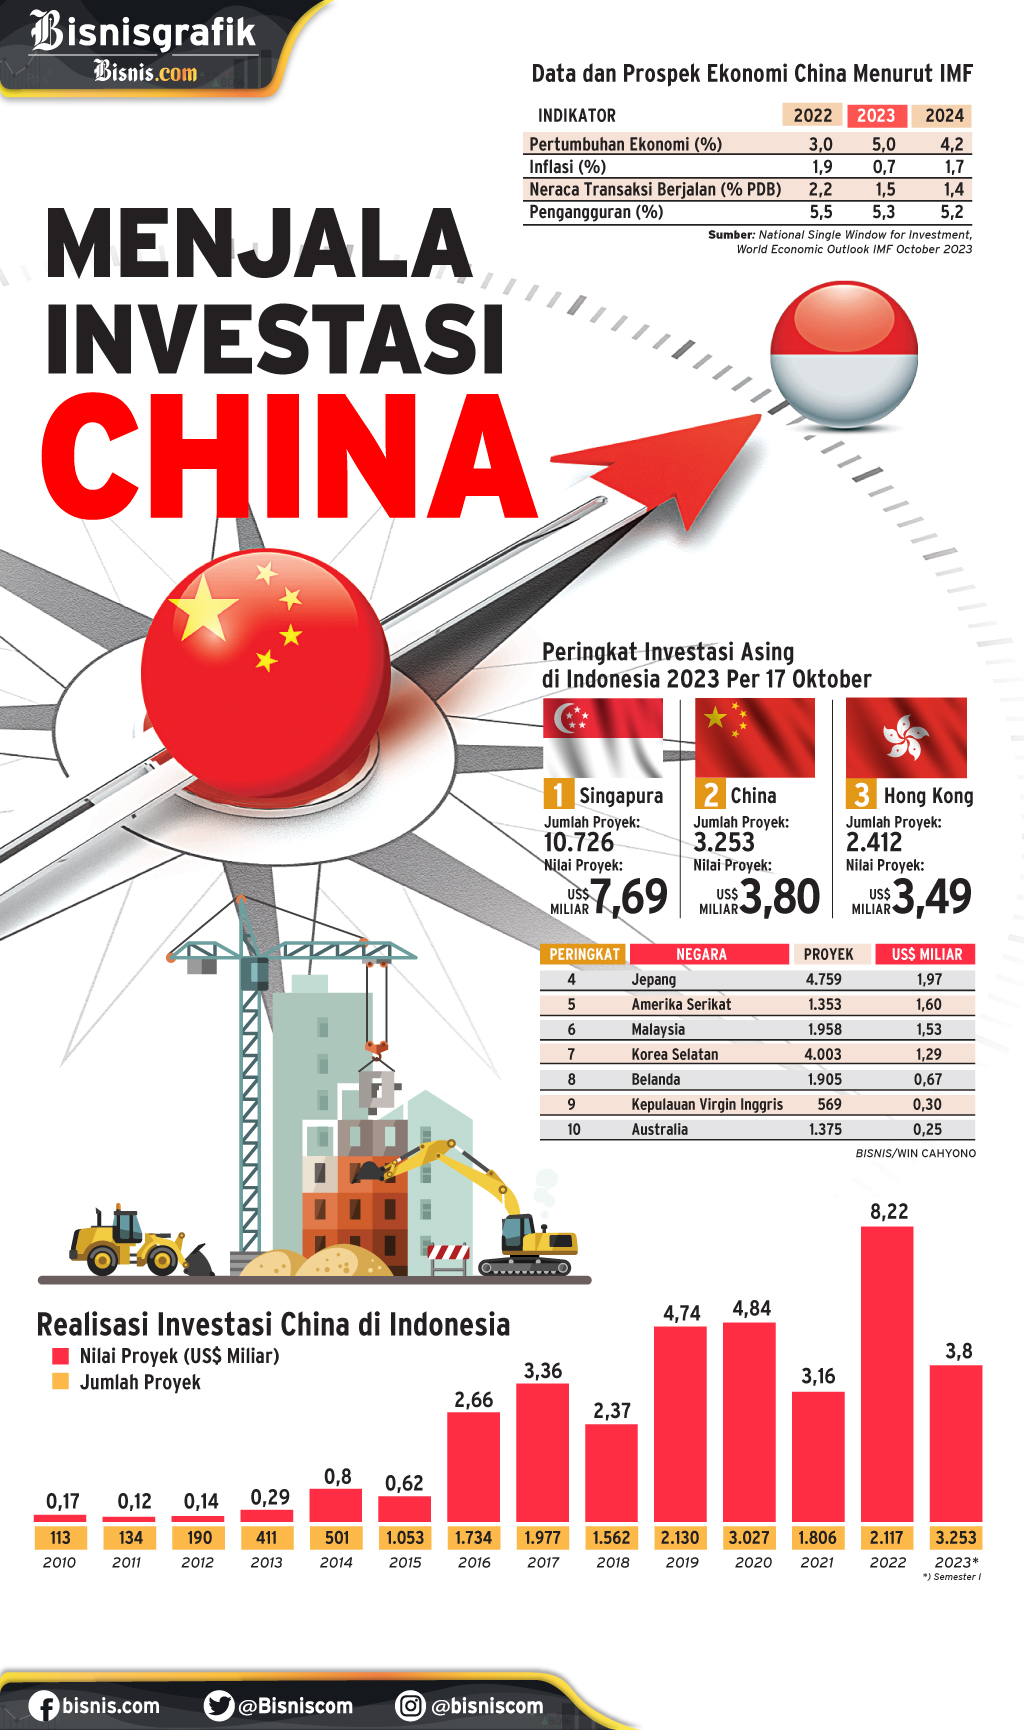  PENANAMAN MODAL : Menjala Investasi China